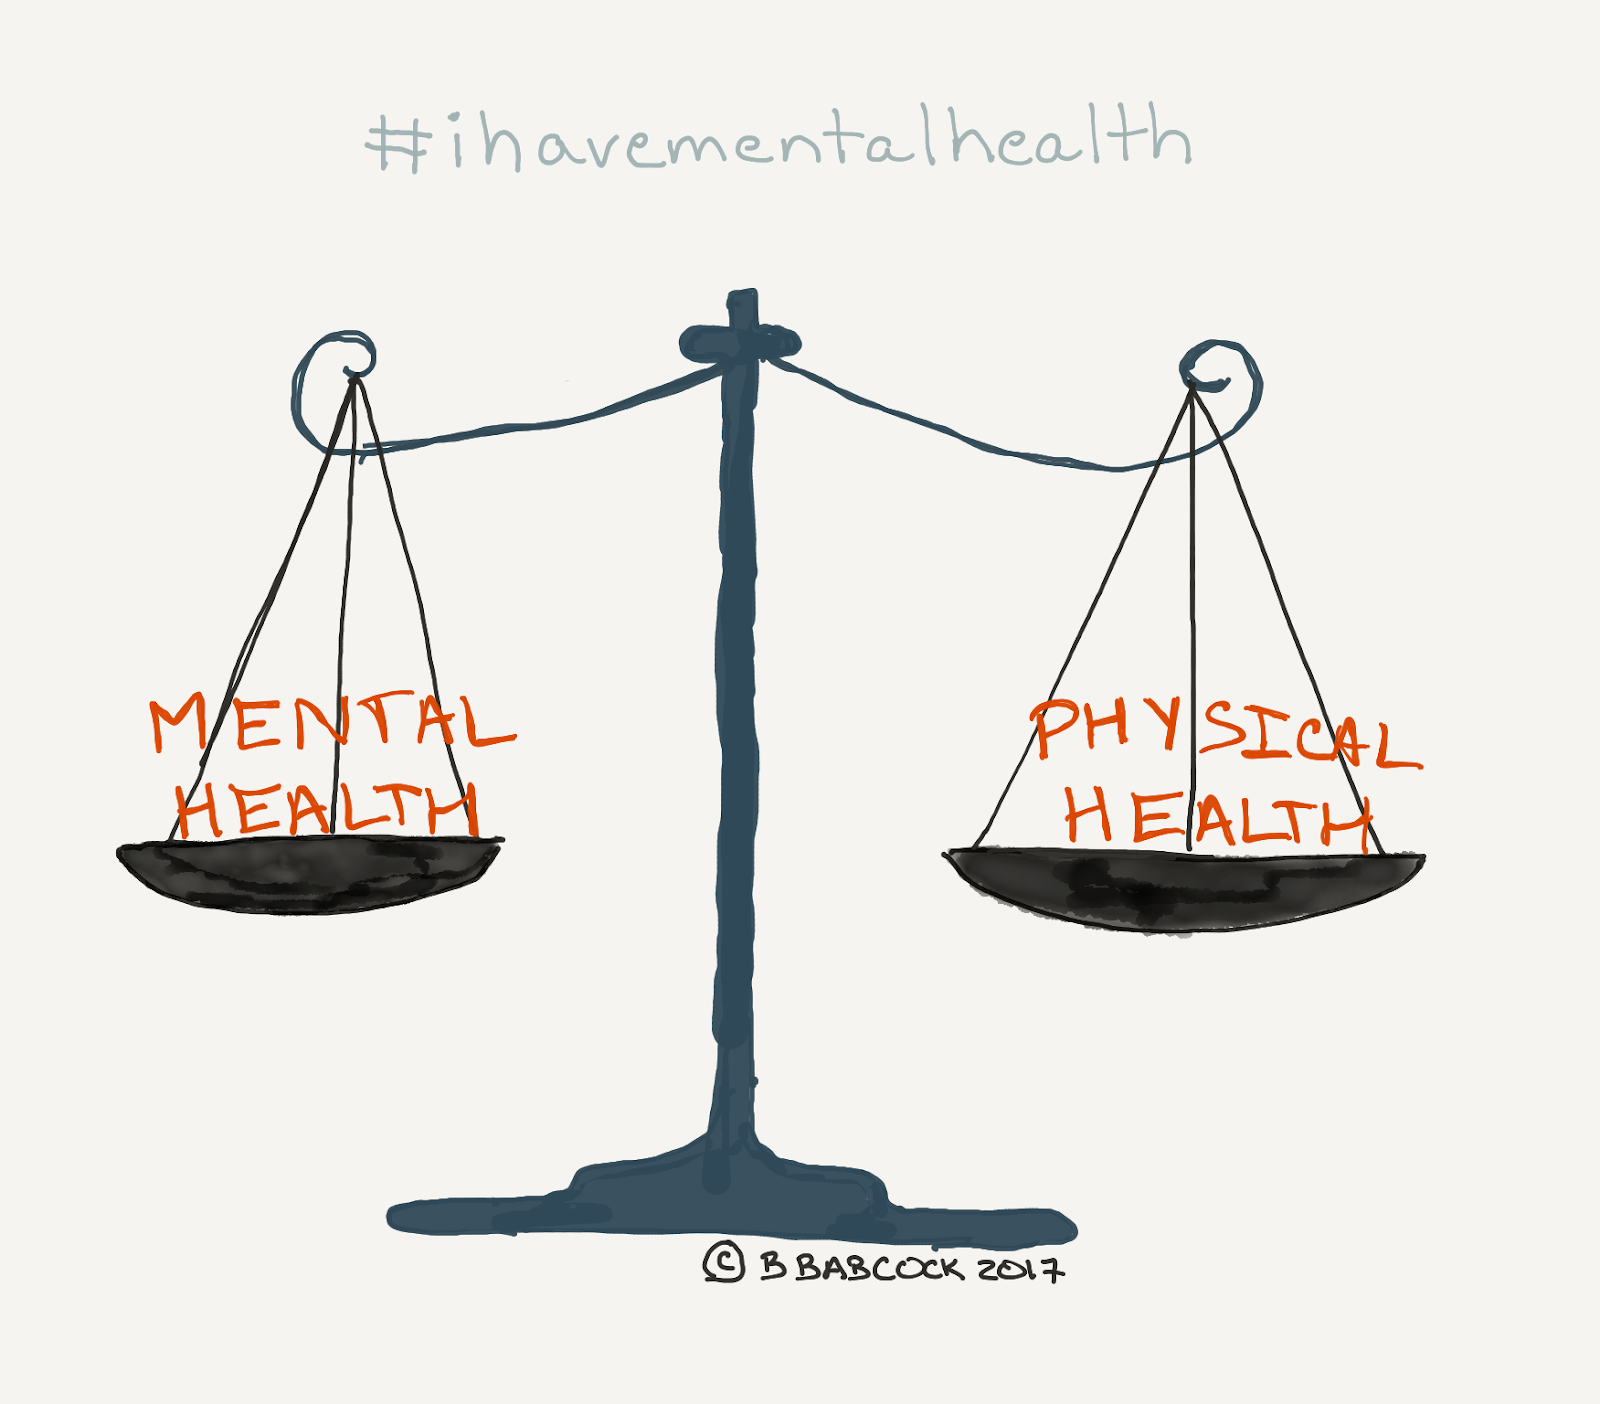 mental health and physical health balance